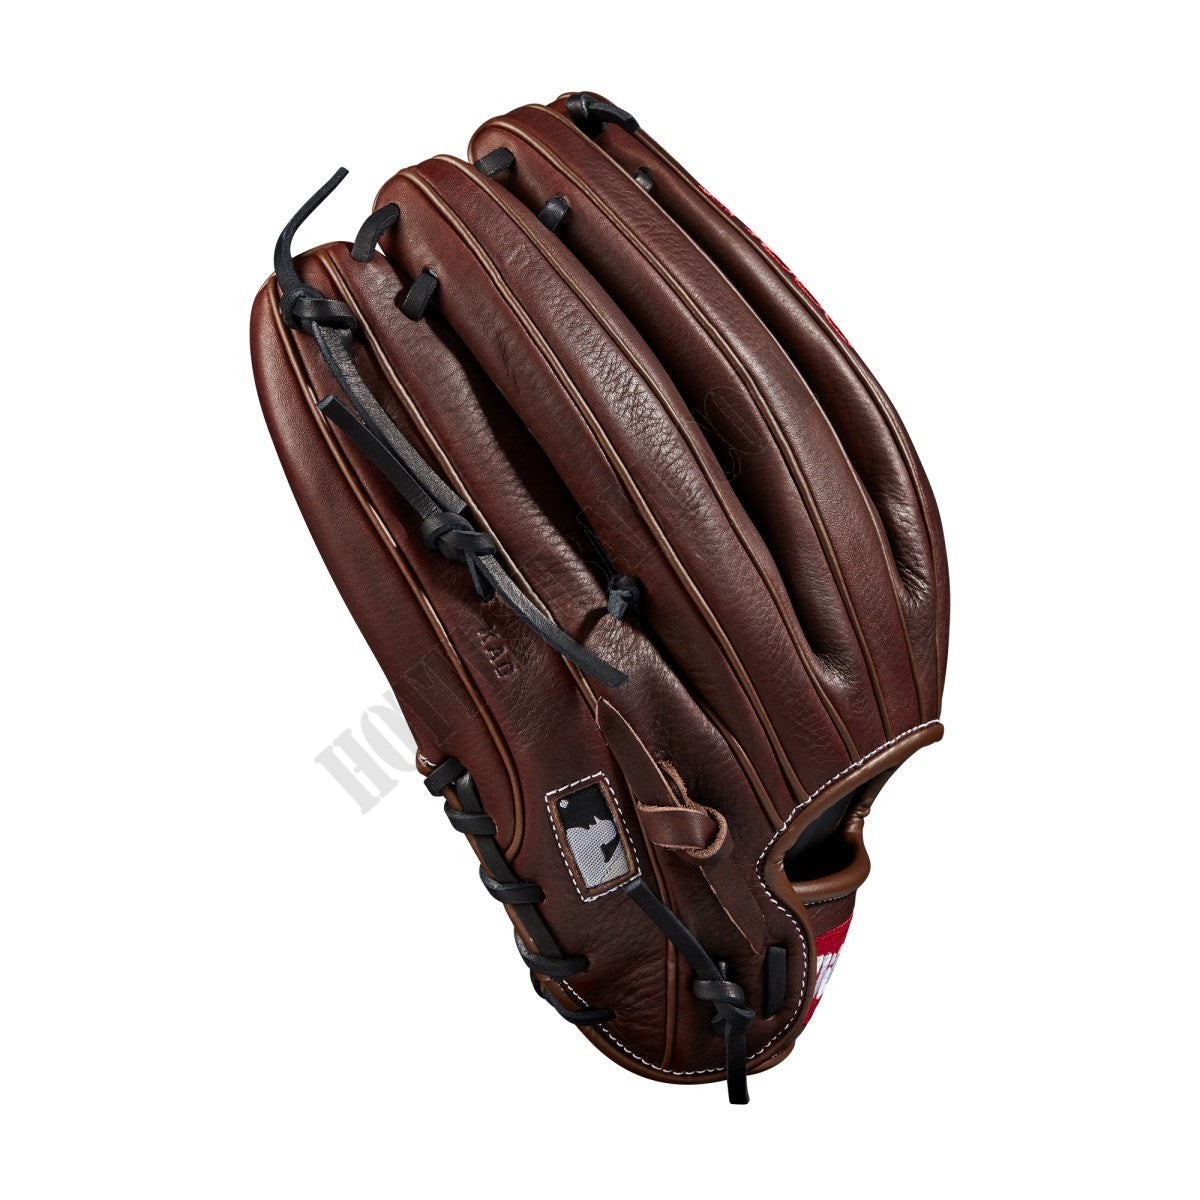 2020 A1000 KP92 12.5" Baseball Glove ● Wilson Promotions - -4